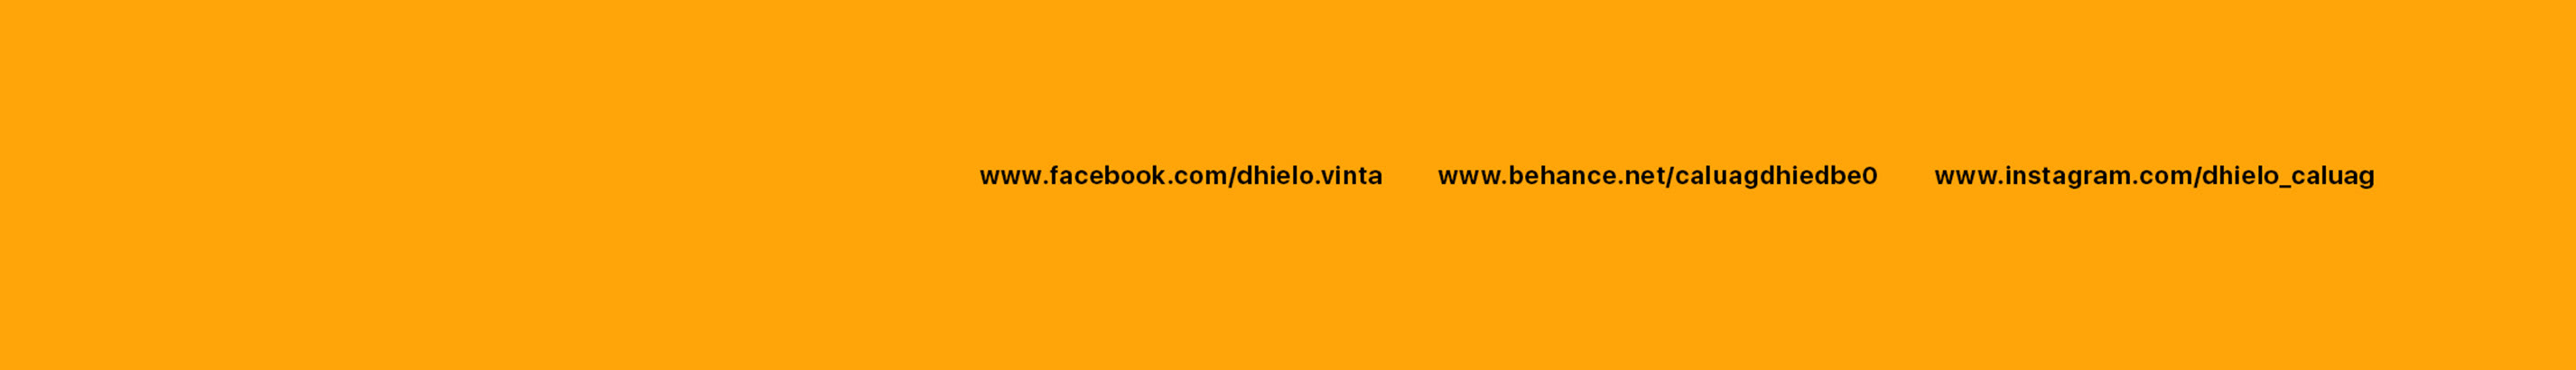 Vicente Angelo Vinta's profile banner